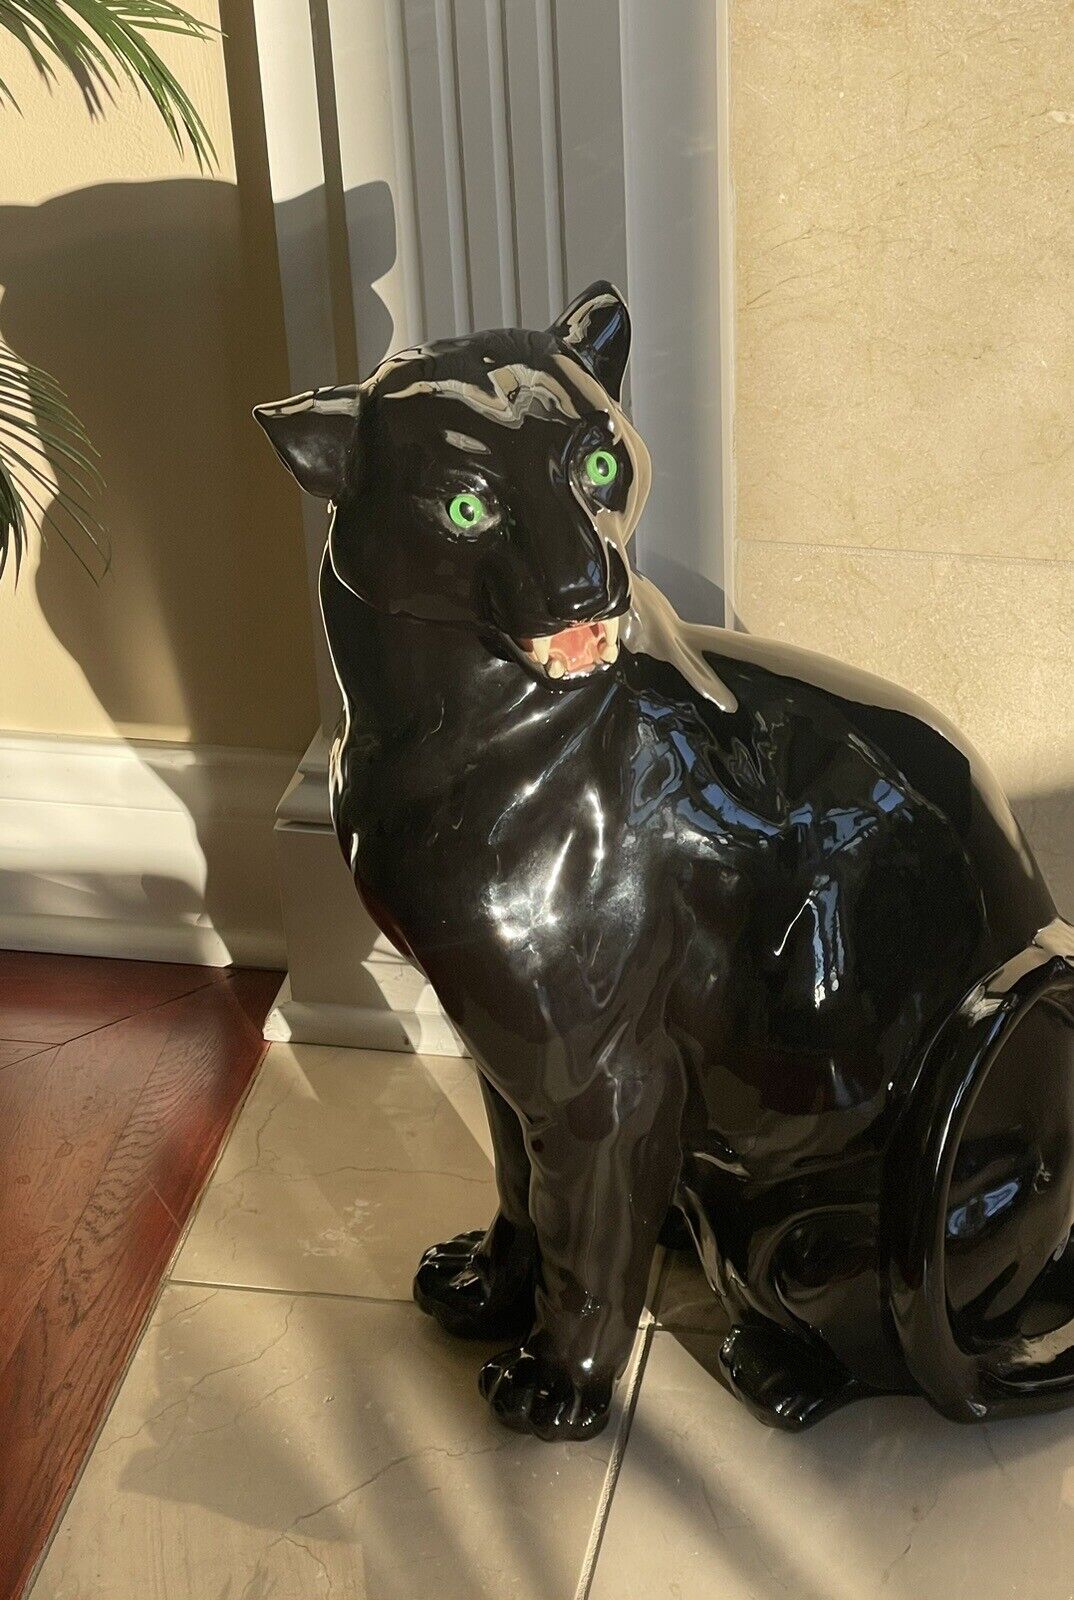 MCM Rare Black Panther Cougar Glass Green Eyes Large Floor Decor Vintage